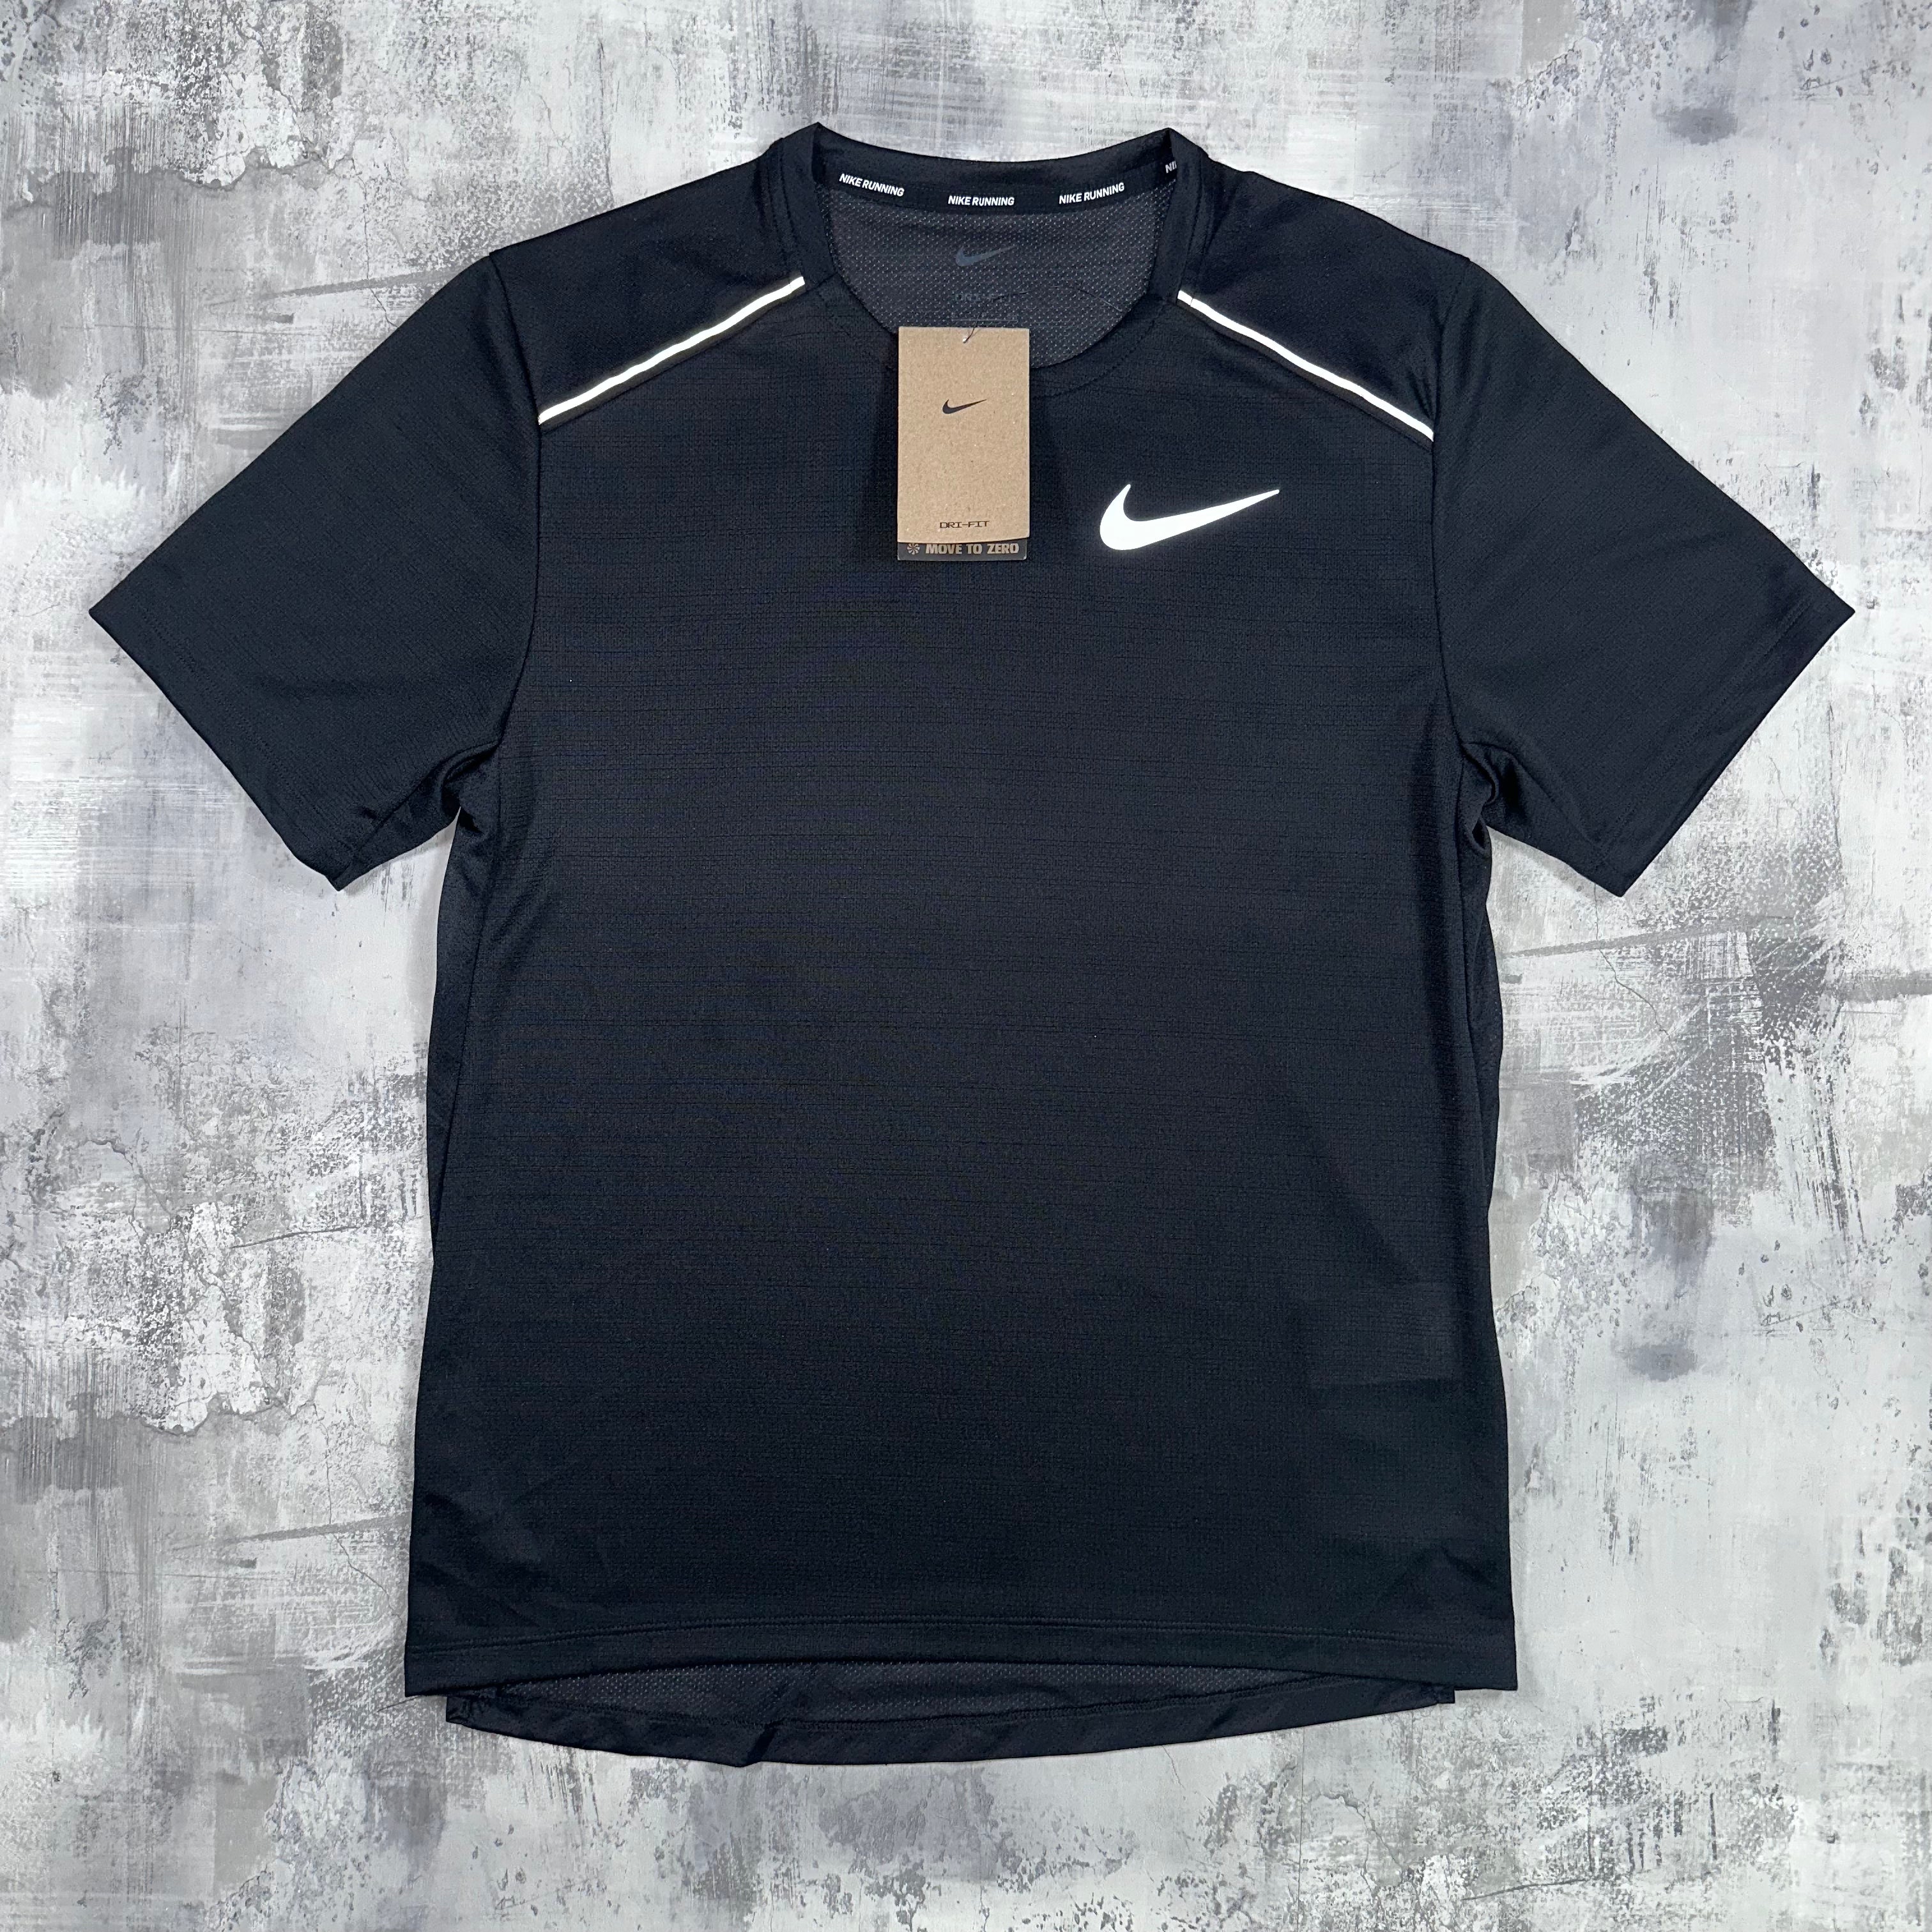 Nike miler t-shirt Black